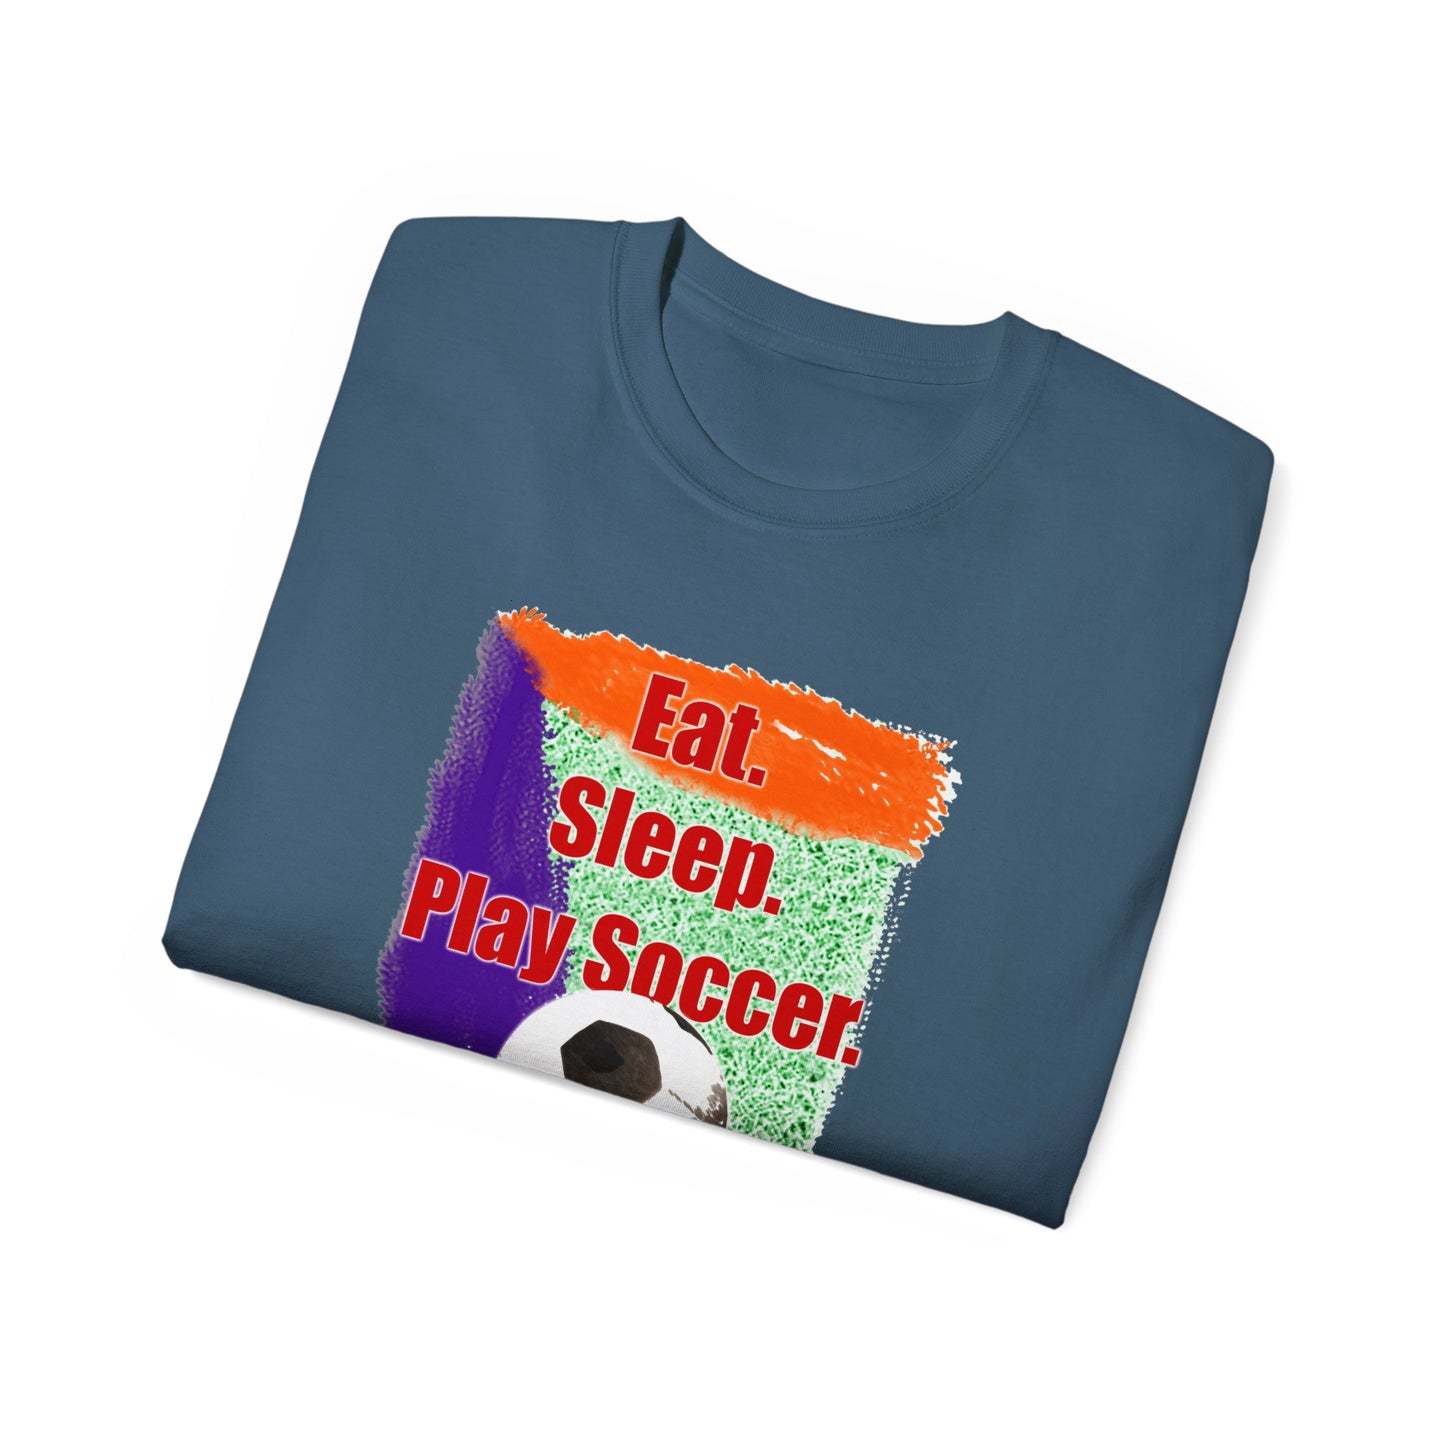 Eat Sleep Play Soccer, Eating and Sleeping Optional, Funny Full Color Vibrant Print Soccer T-Shirt, baseball gift, baseball t-shirt, tee